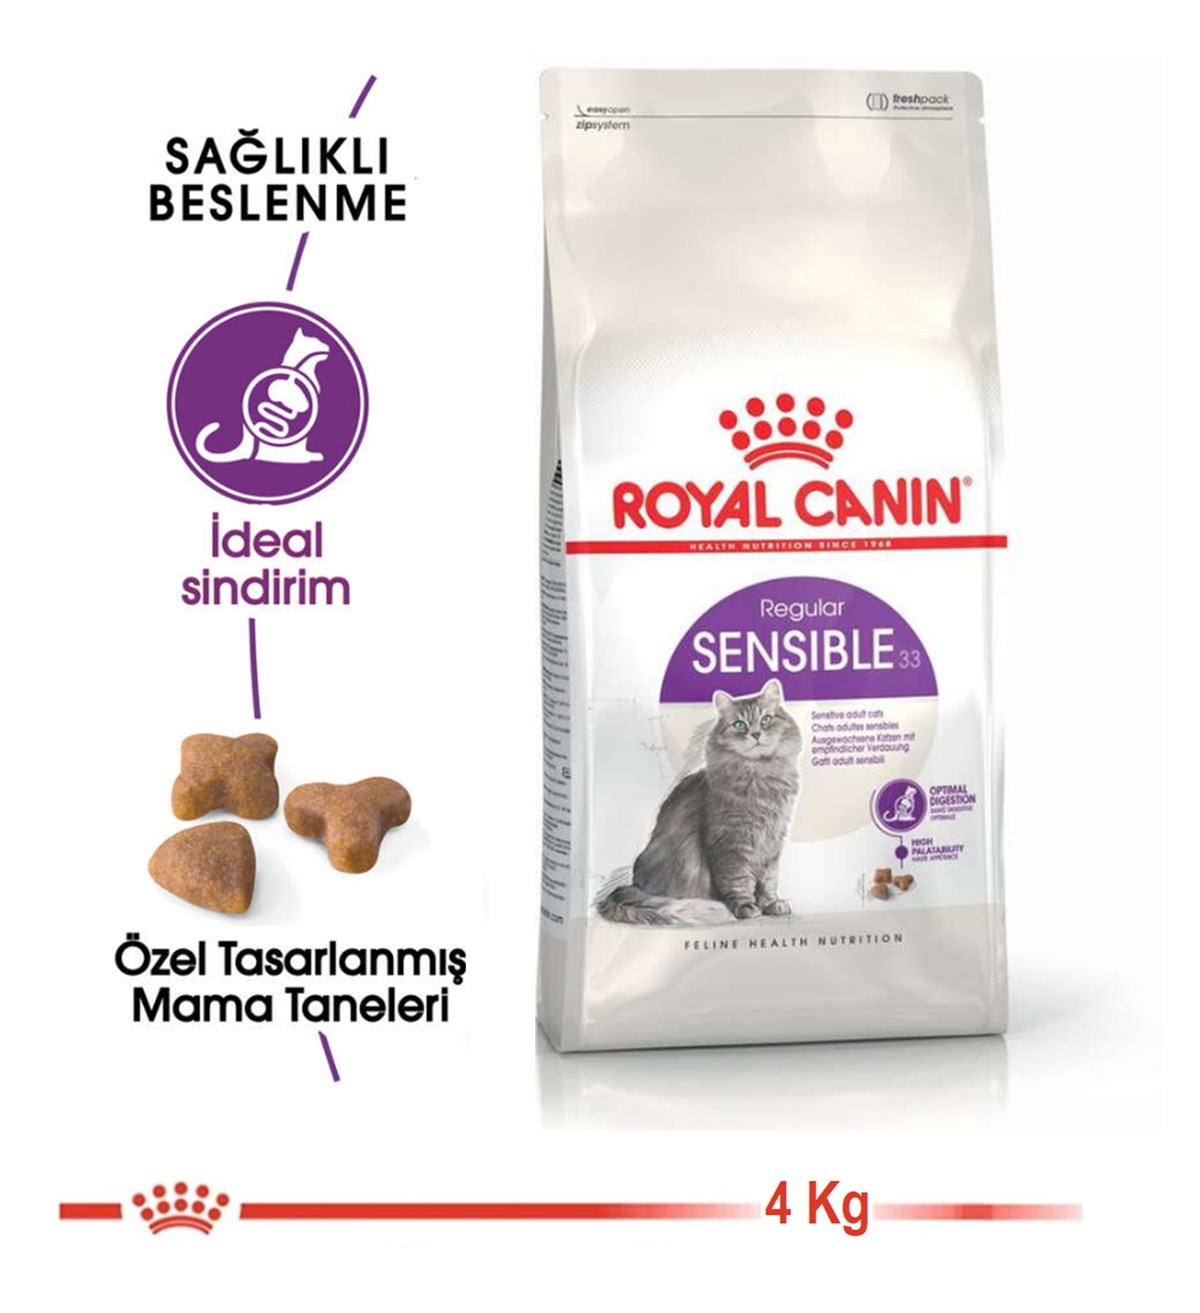 Royal Canin Sensible Hassas Sindirim Kedi Maması  4 kg